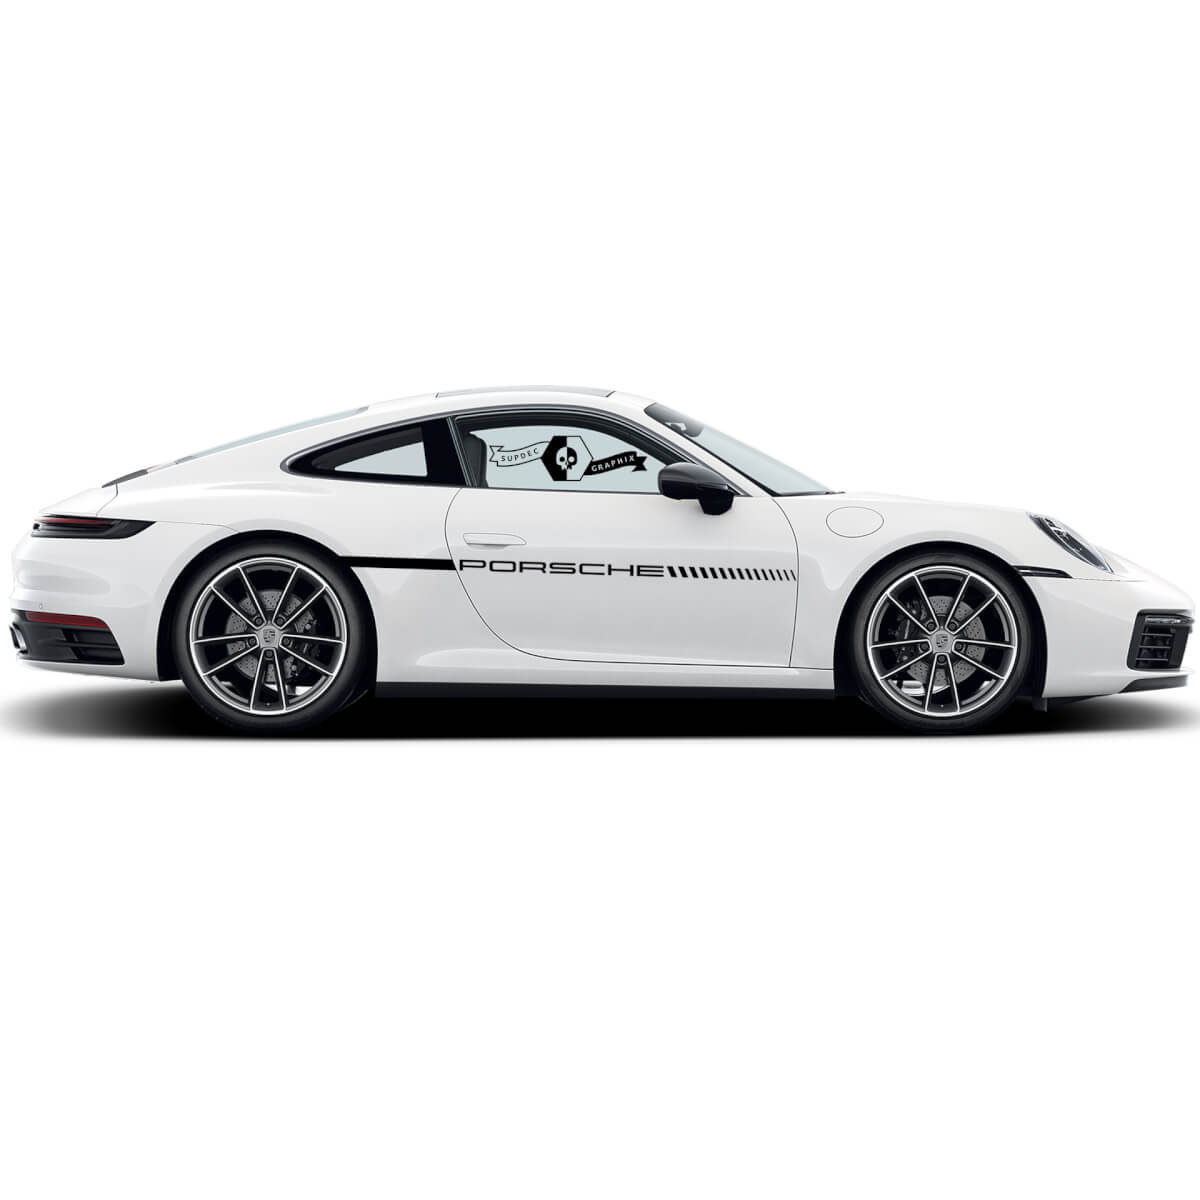 Porsche 911 Carrera Classic Side Stripes Up Doors Kit Decal Sticker 